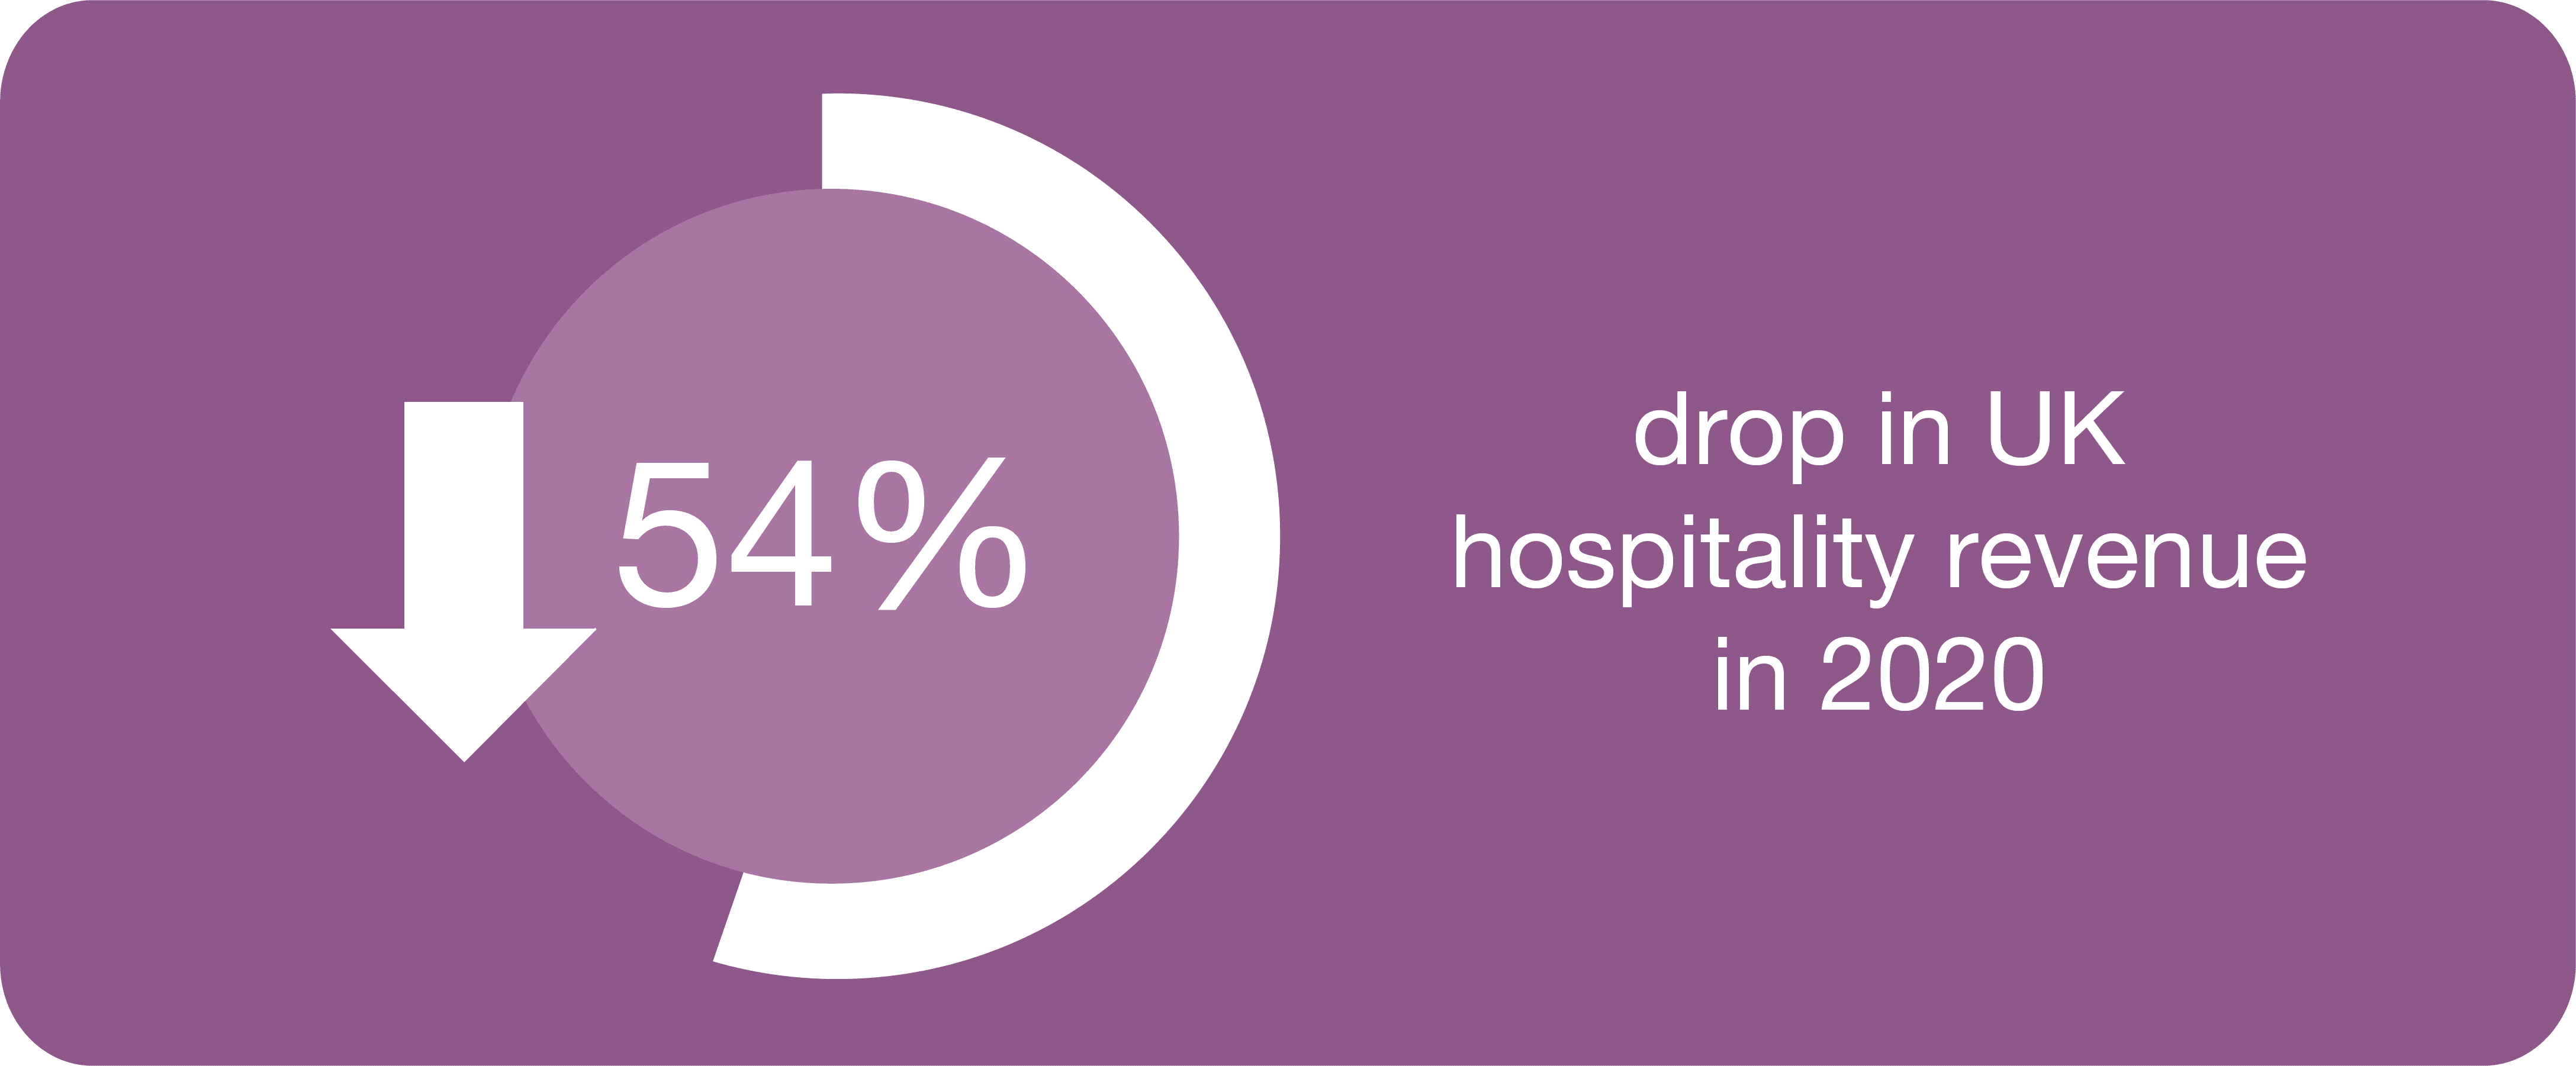 54% drop in UK hospitality revenue